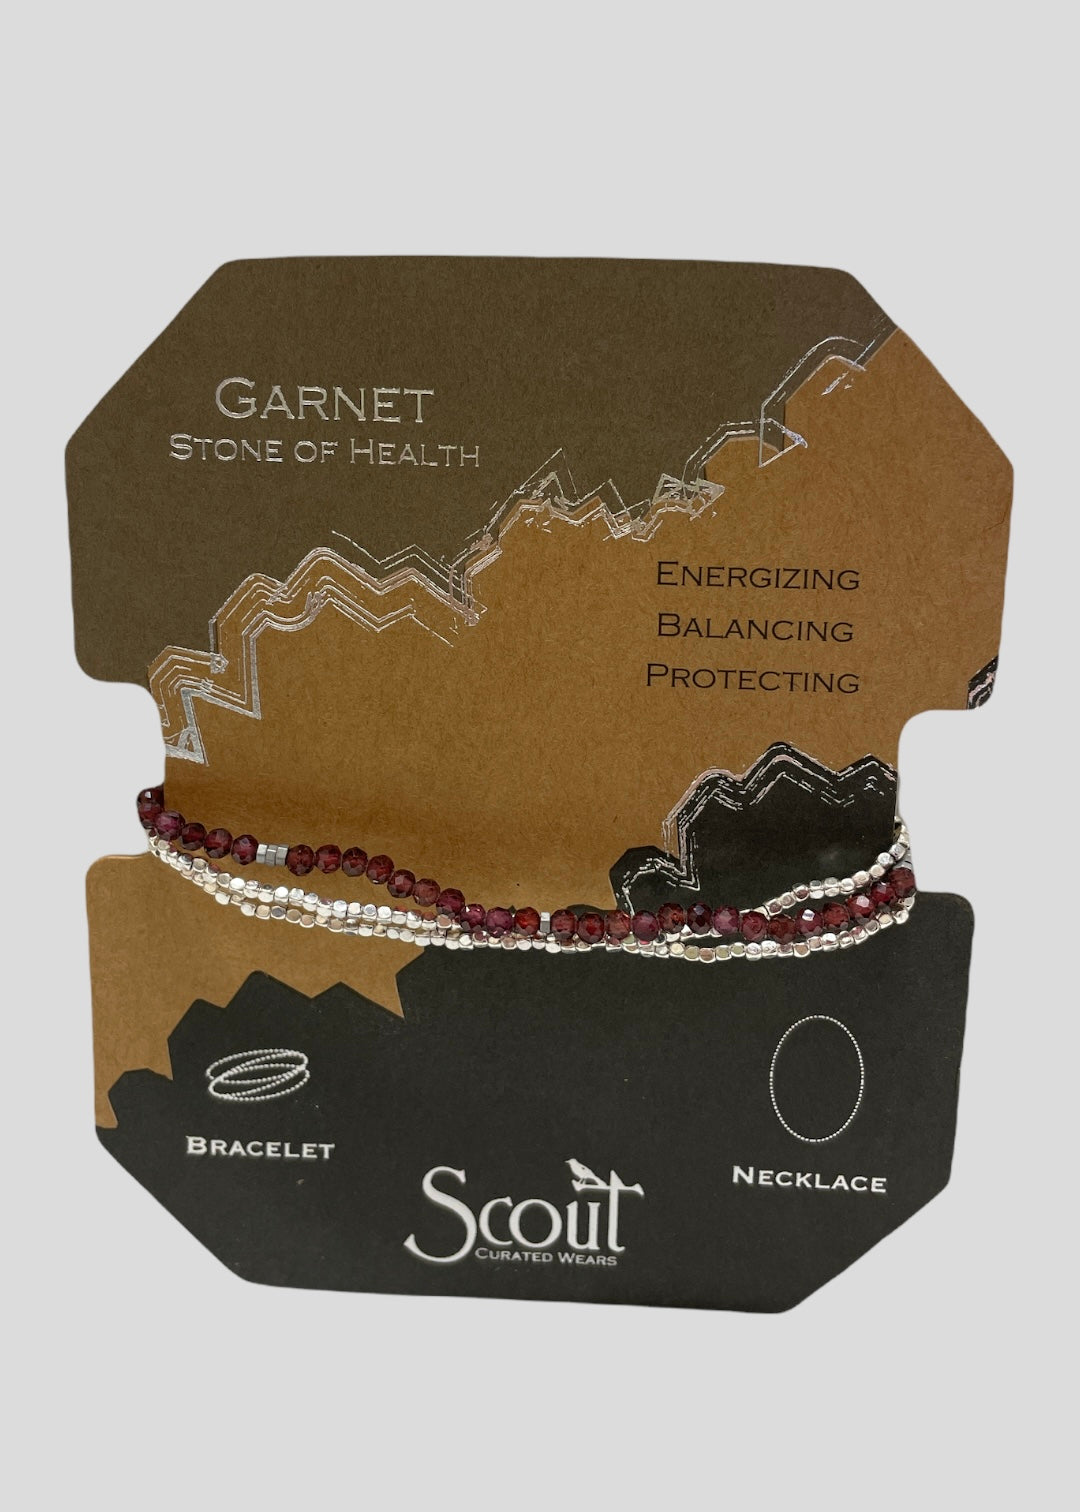 Stone of Health- Garnet